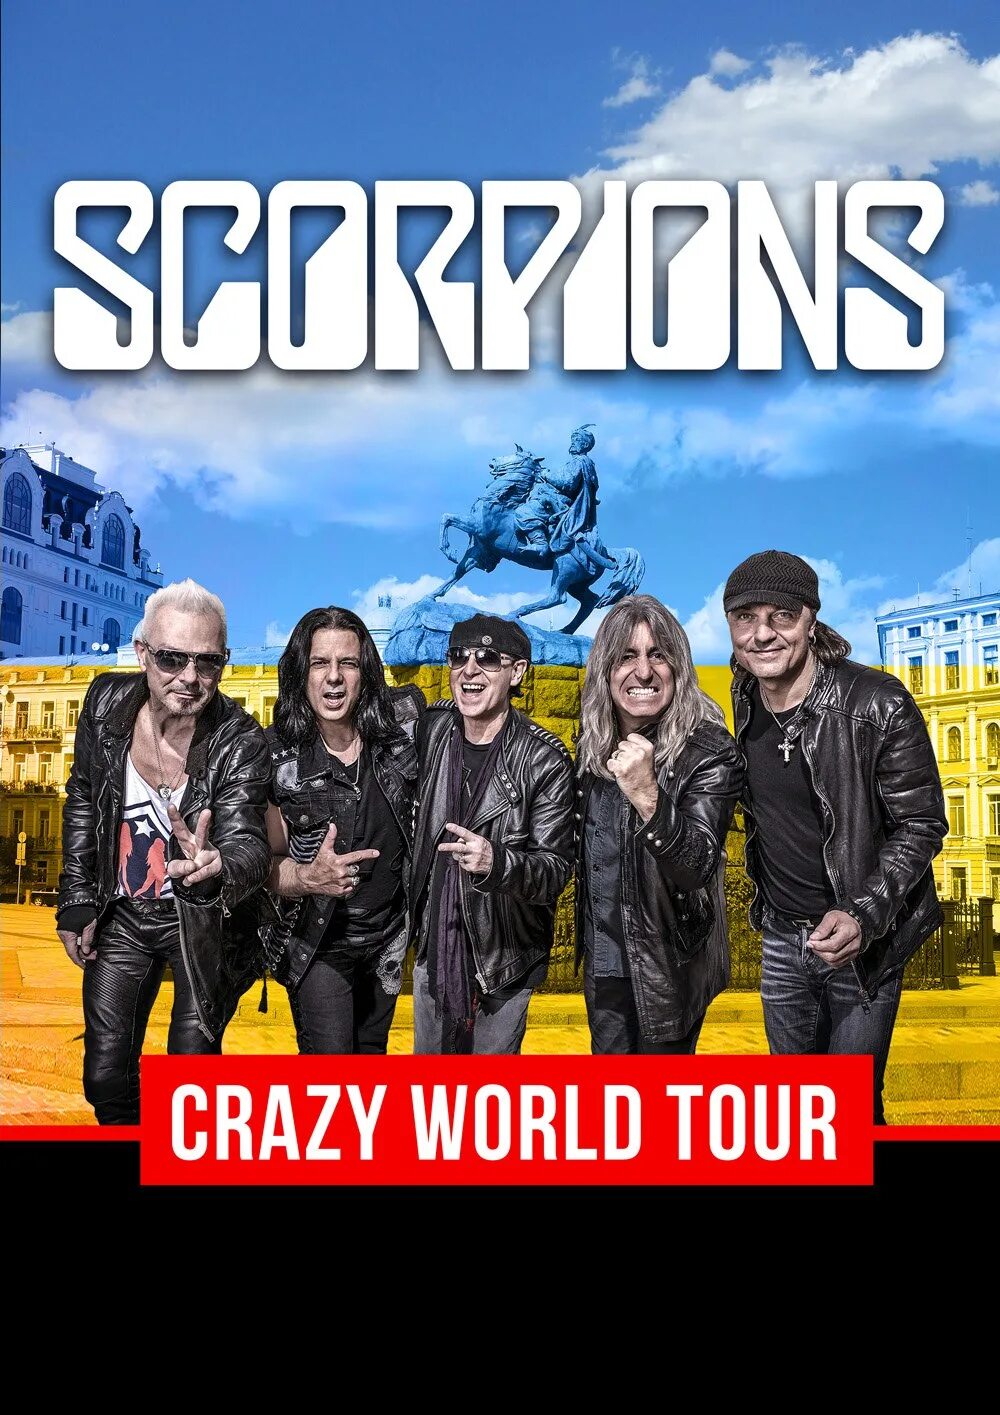 Скорпионс. Группа Scorpions. Scorpions концерт. Афиша скорпионс.